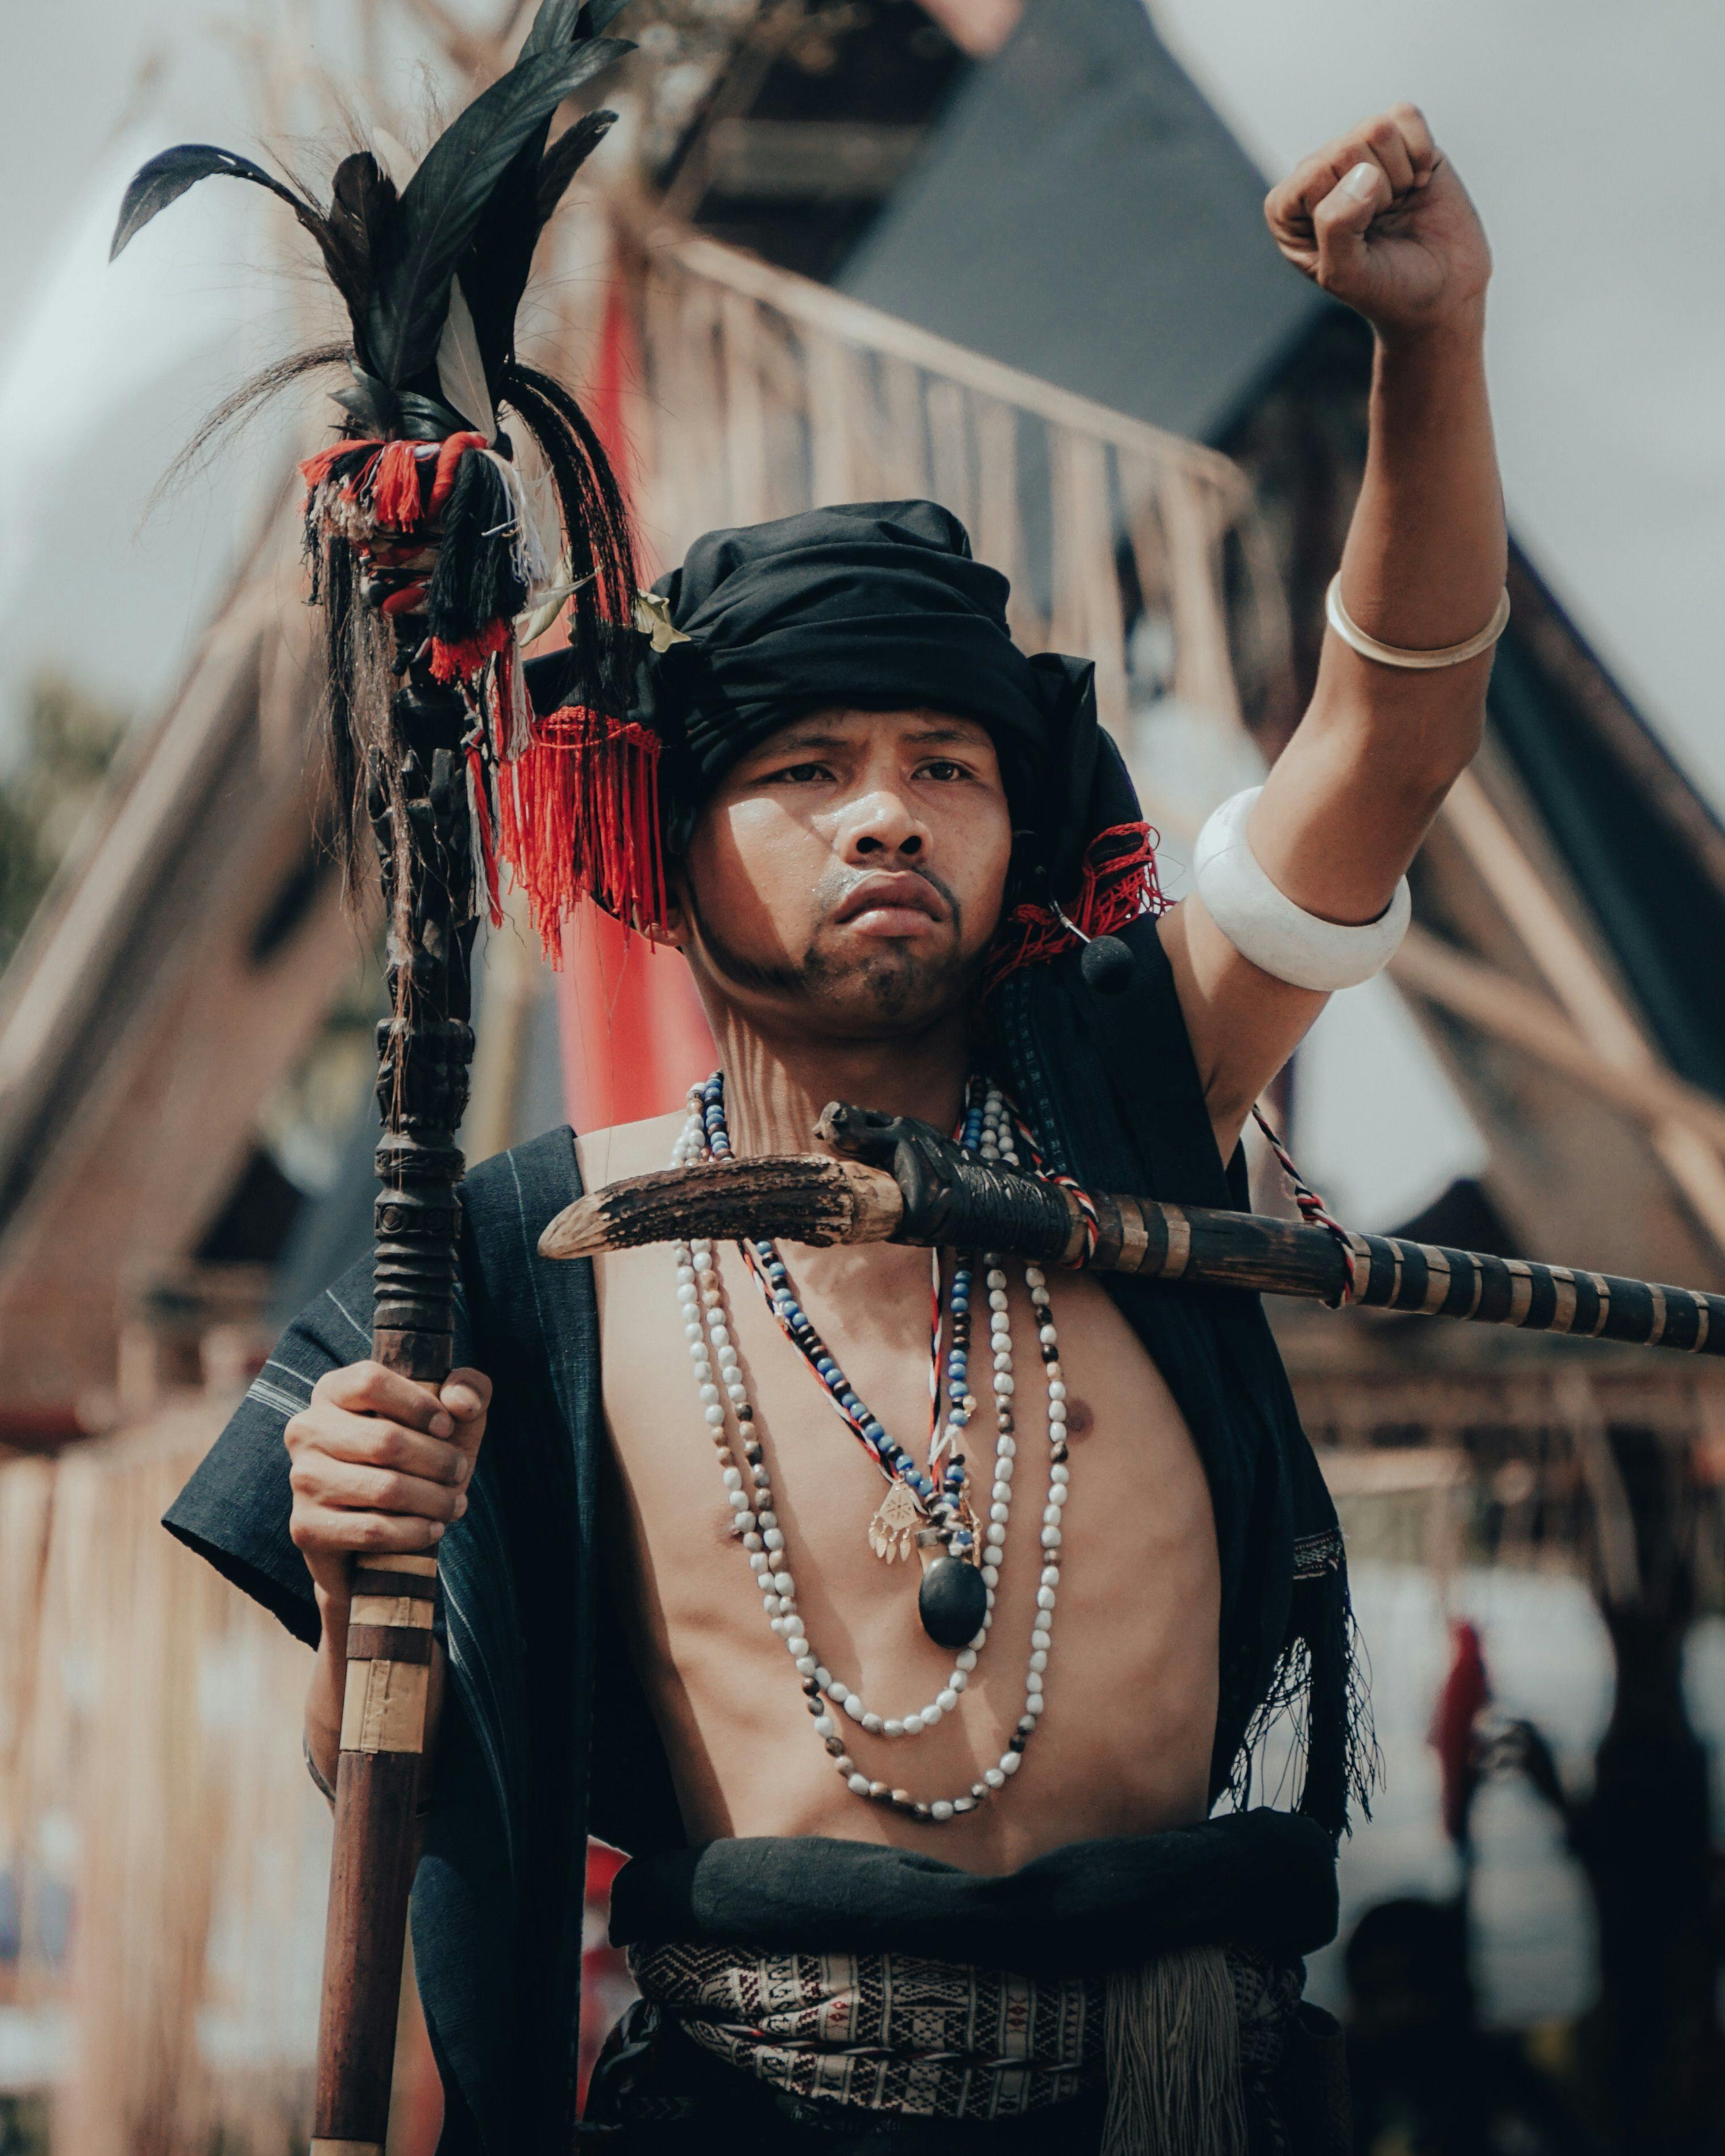 Man from Batak tribe in North Sumatra.